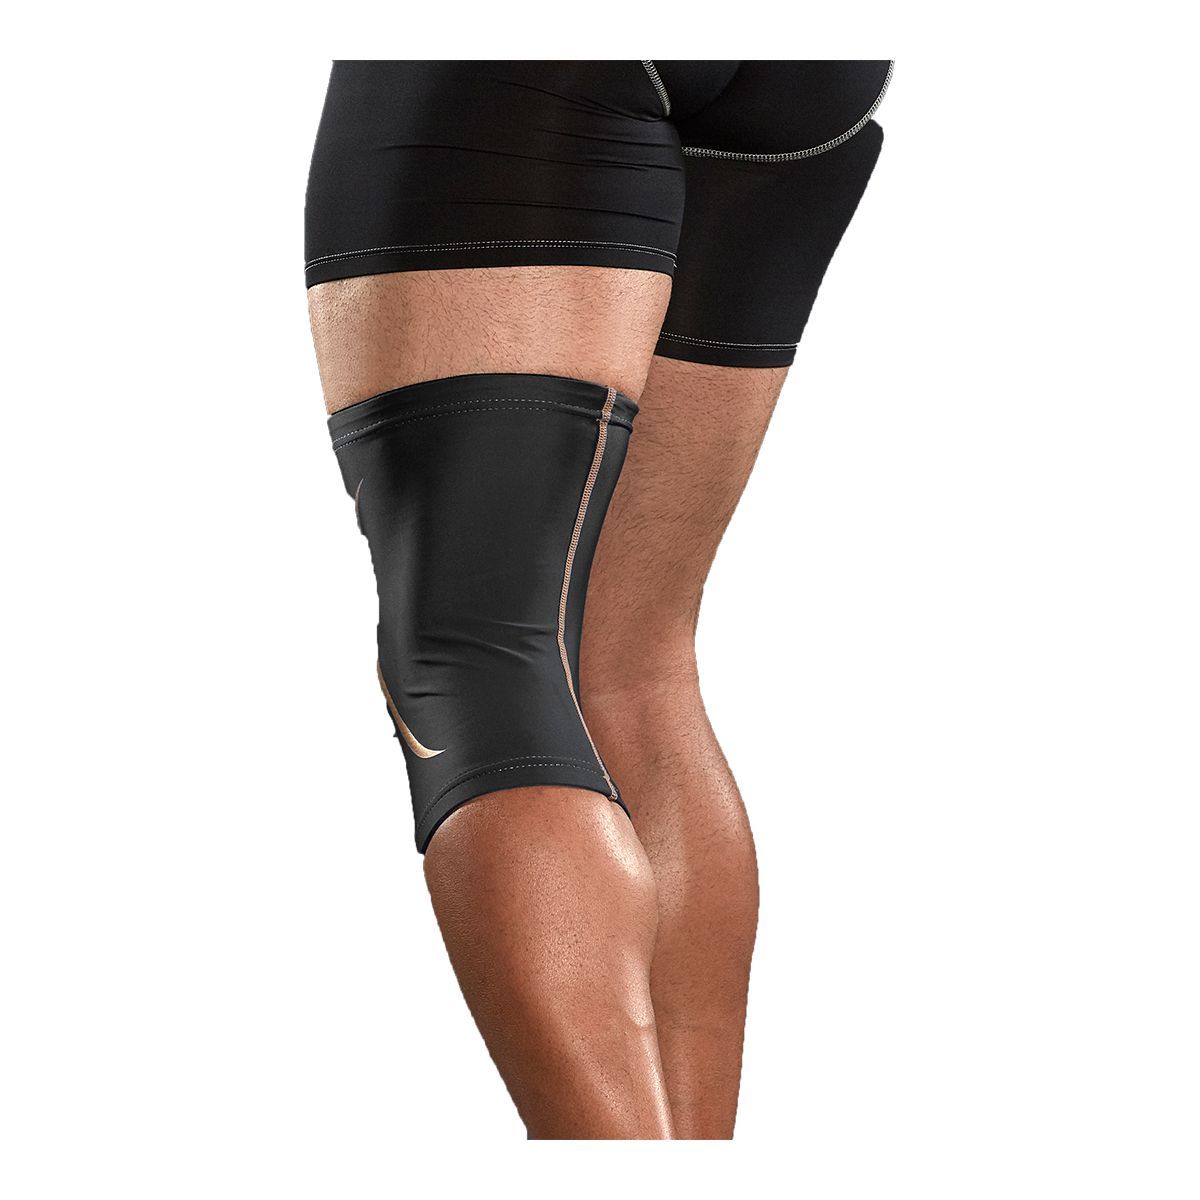 Nike Pro Open Patella Knee Sleeve 2.0 - Black - Soccer Shop USA